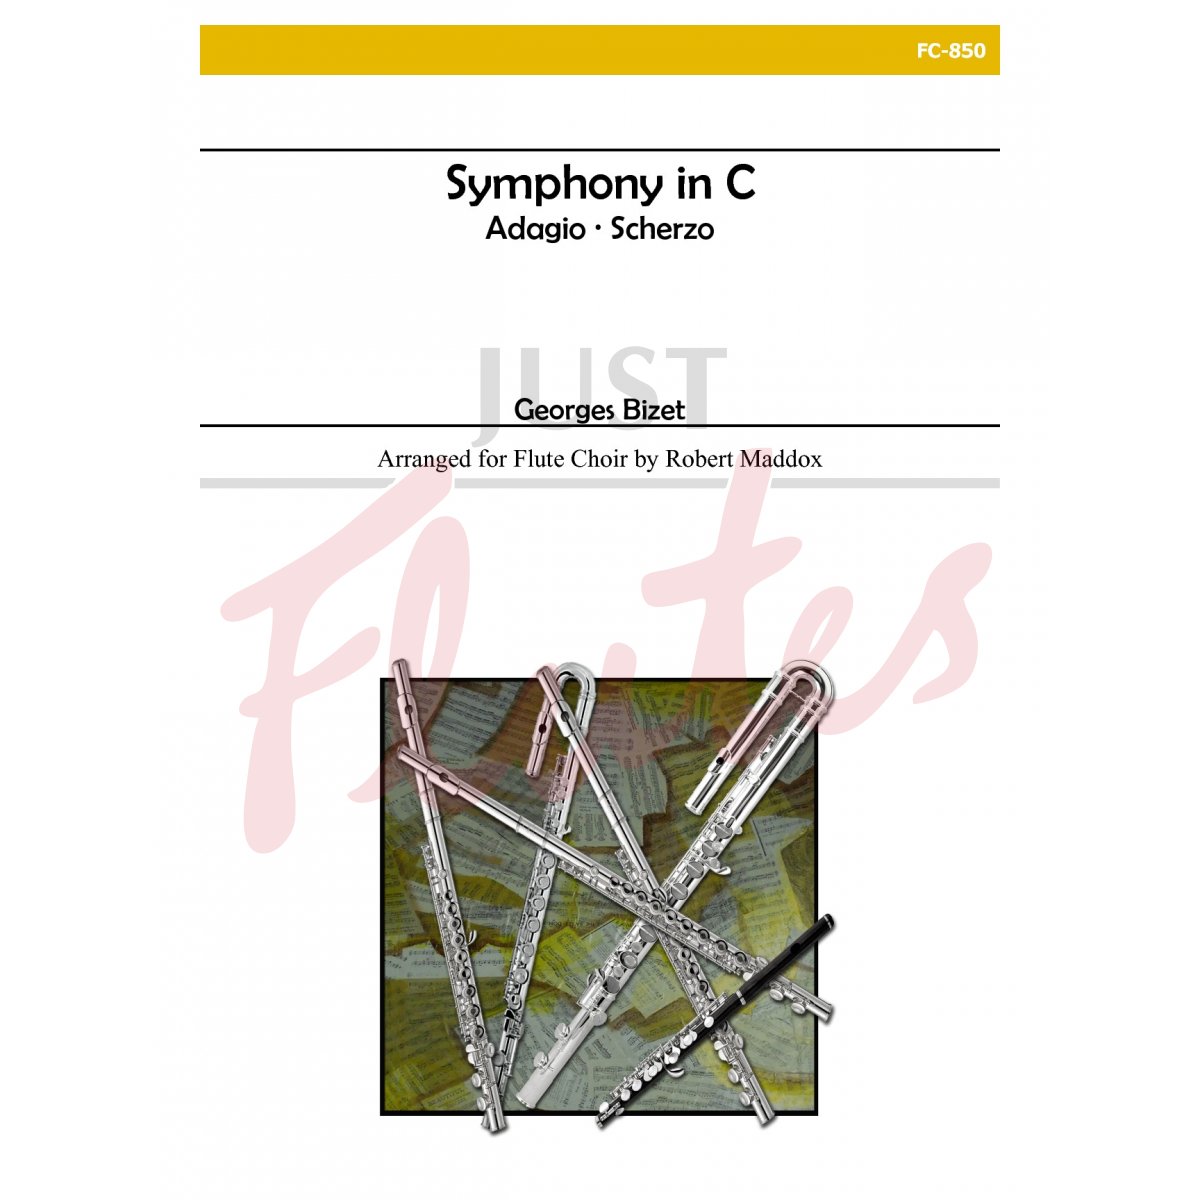 Symphony in C Major: Adagio and Scherzo for Flute Choir